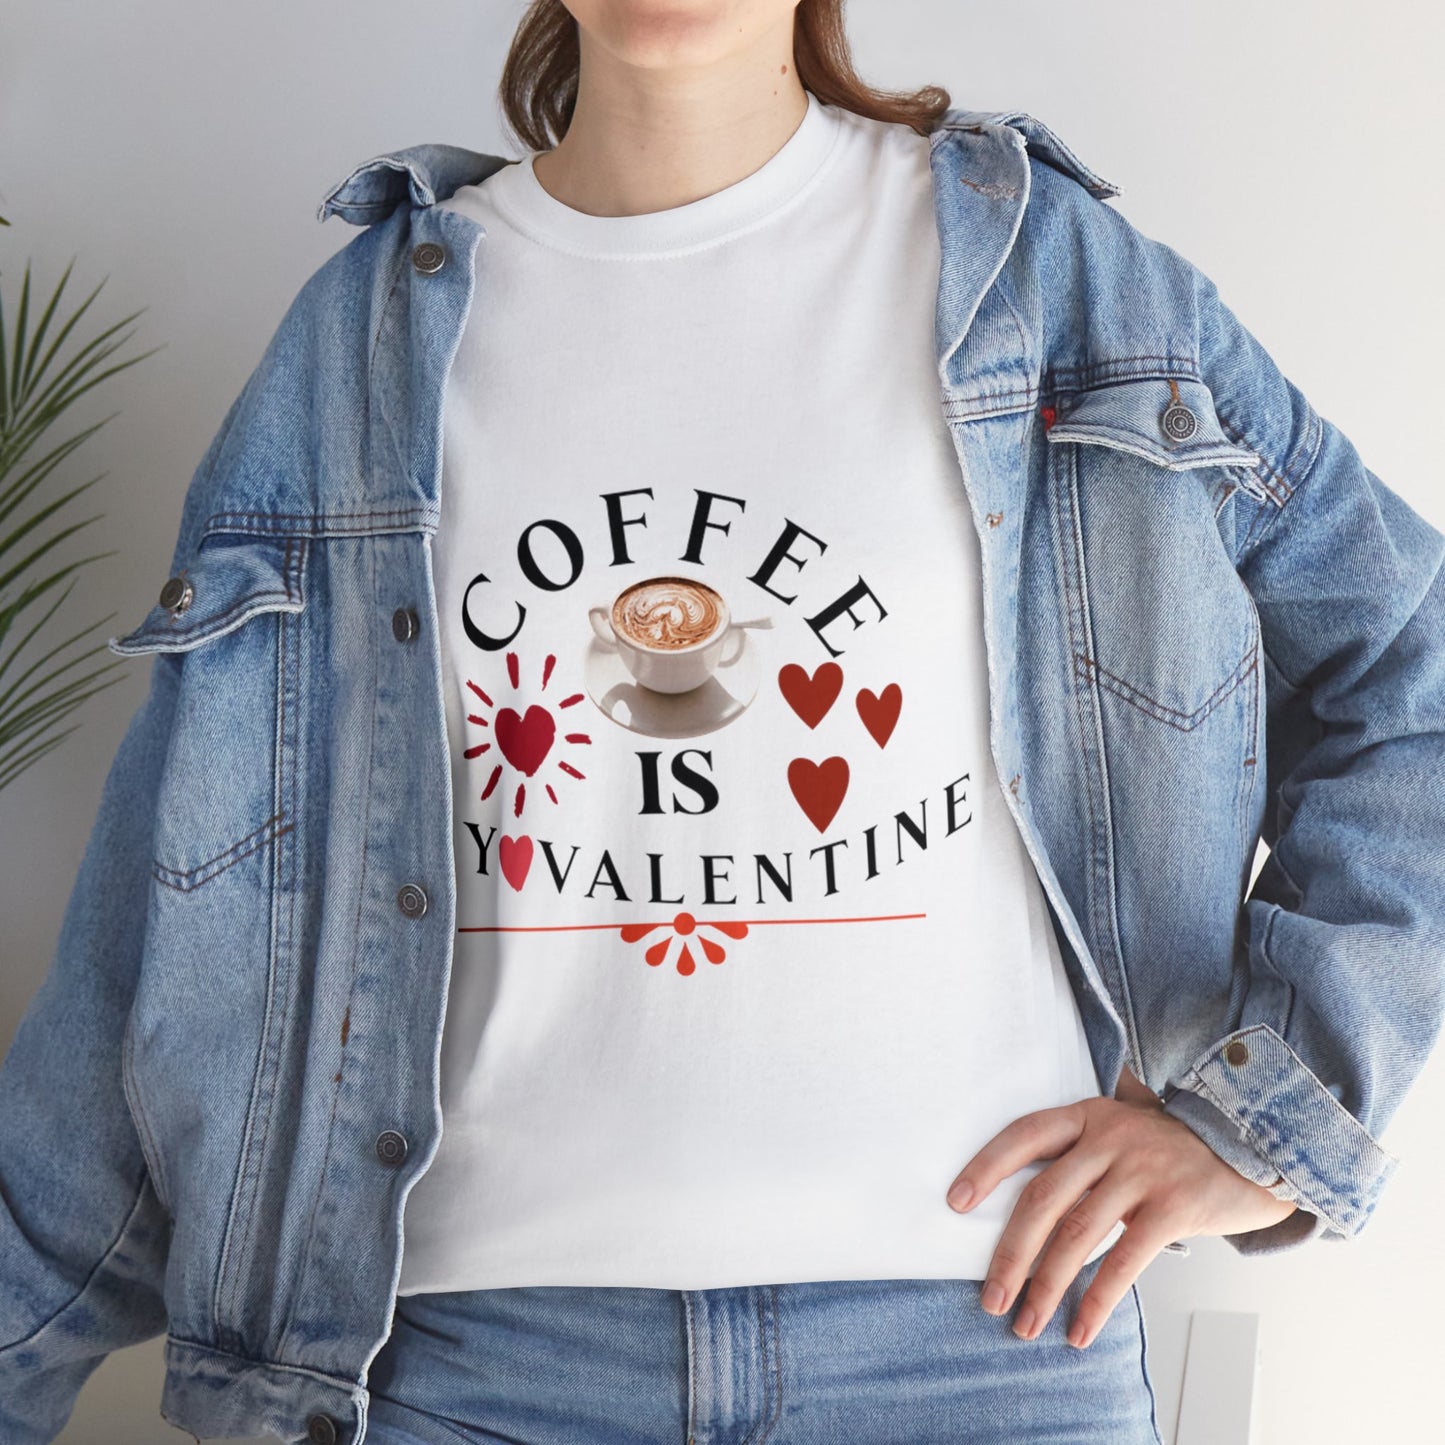 Coffee is my valentine - Unisex Heavy Cotton Tee